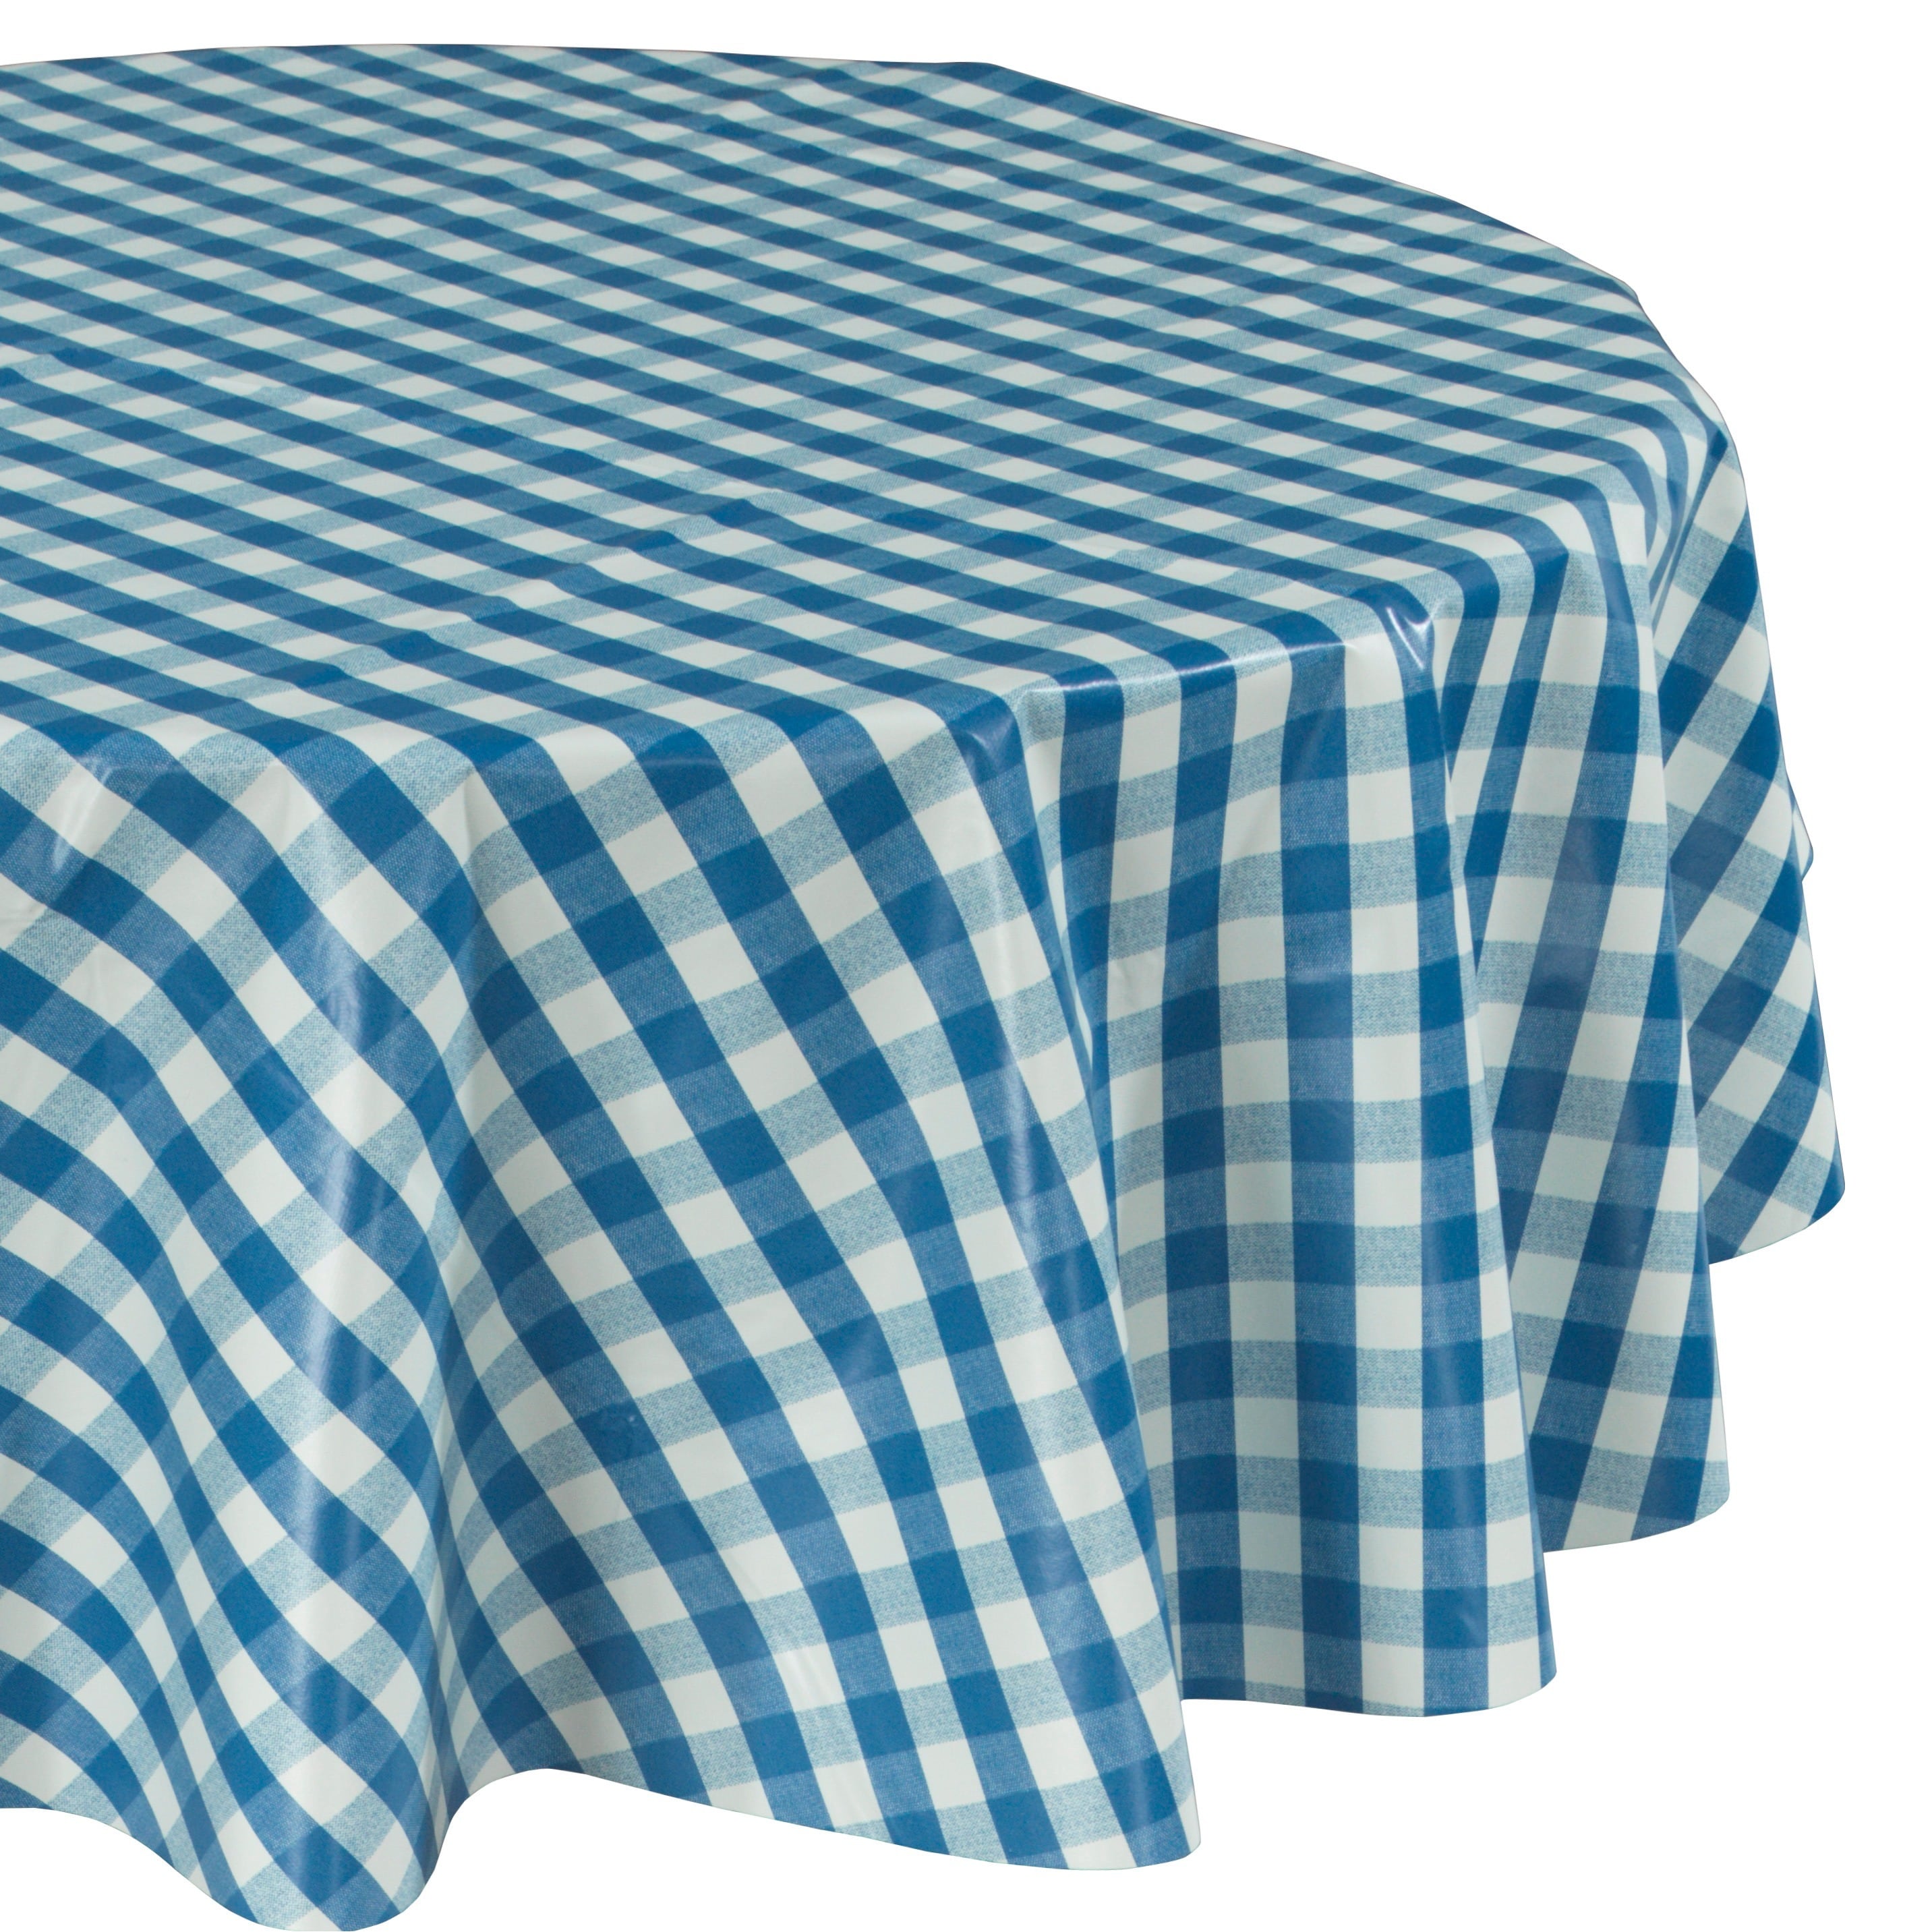 Ottomanson Vinyl Tablecloth Plaid Design Indoor & Outdoor Non-Woven Backing Tablecloth Blue 55 X 102 TAB1167-55X102 55 X 102